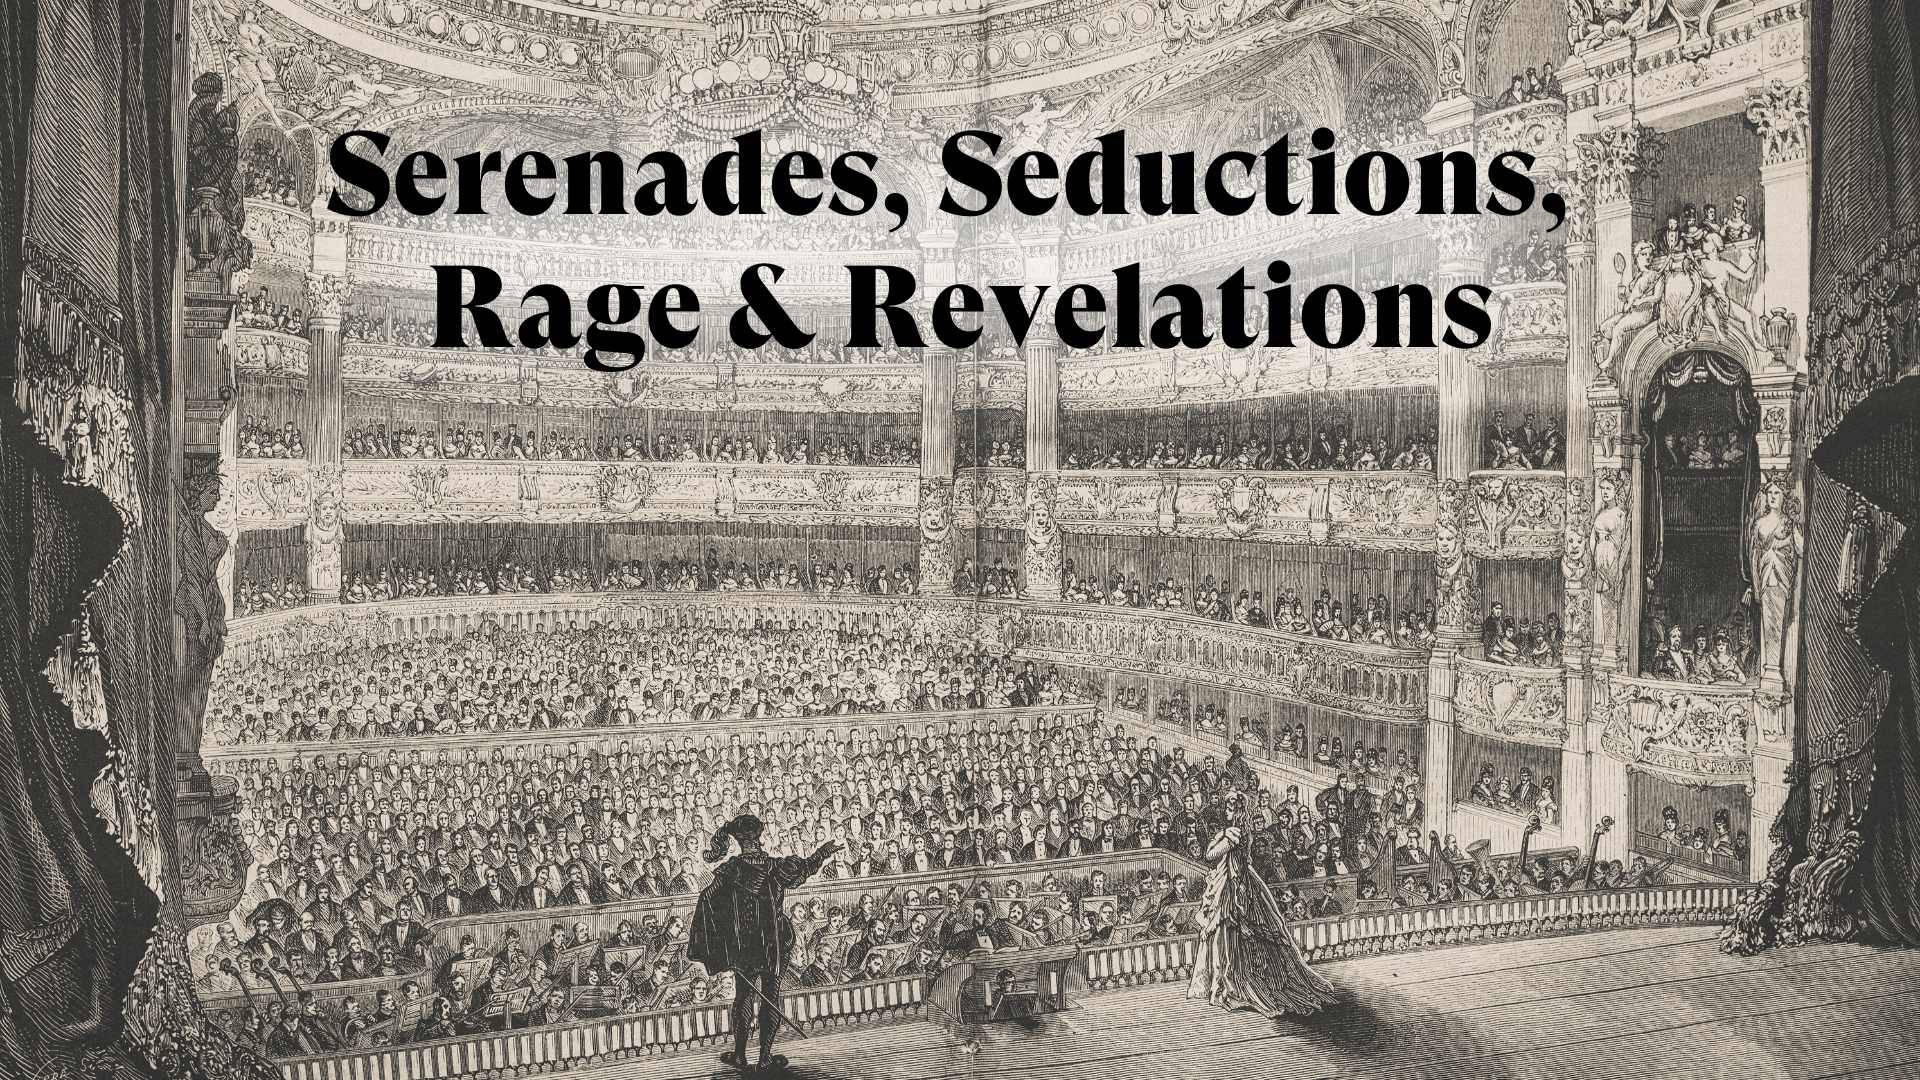 Serenades, Seductions, Rage & Revelations